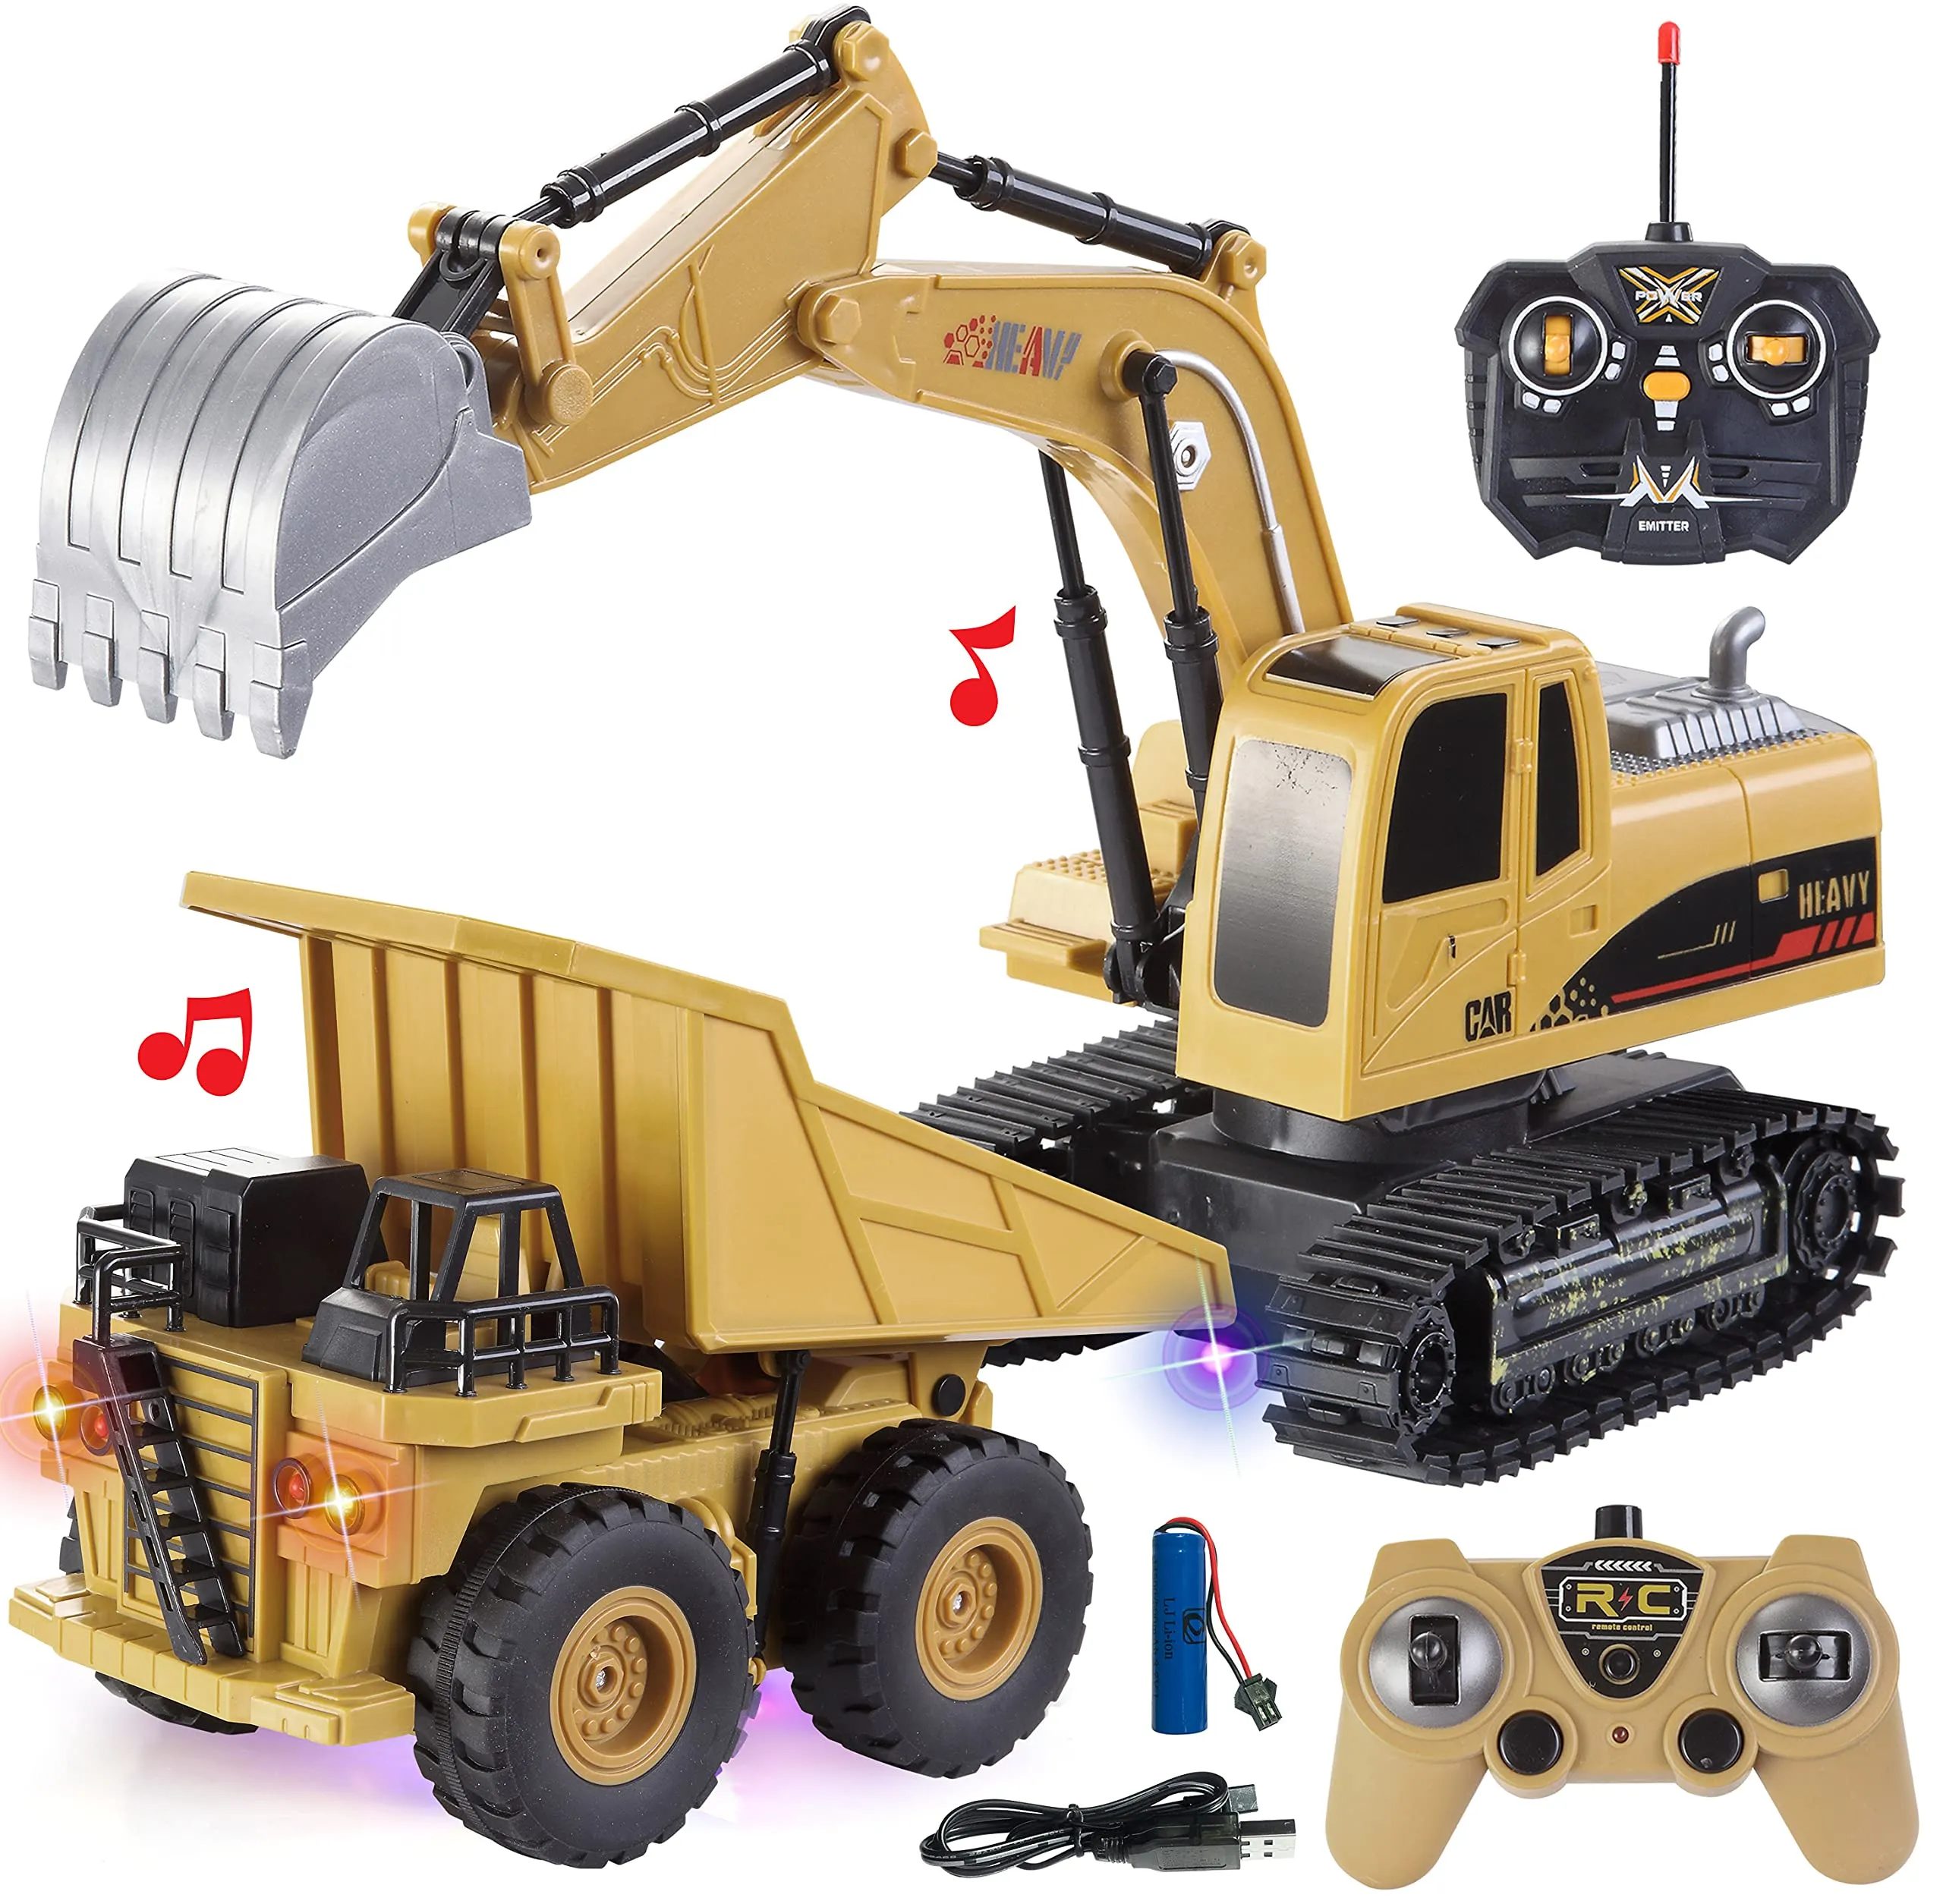 Amazing 2pcs Remote Control Construction Vehicle Toy Set